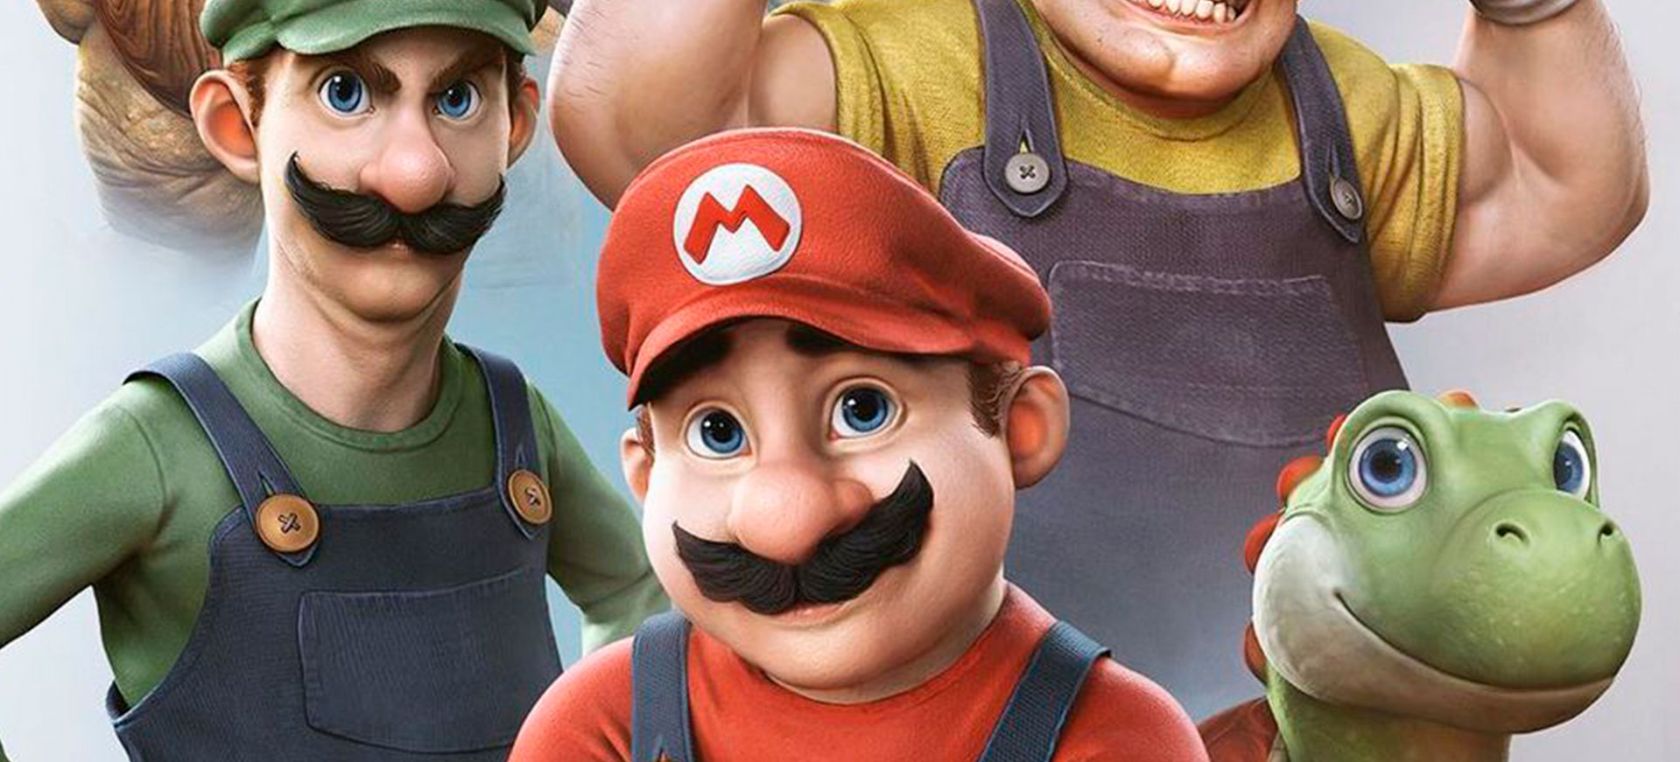 Жизни супер марио. Реалистичный Марио. Марио в реальной жизни. Реалистичные персонажи Марио. Супер братья Марио.